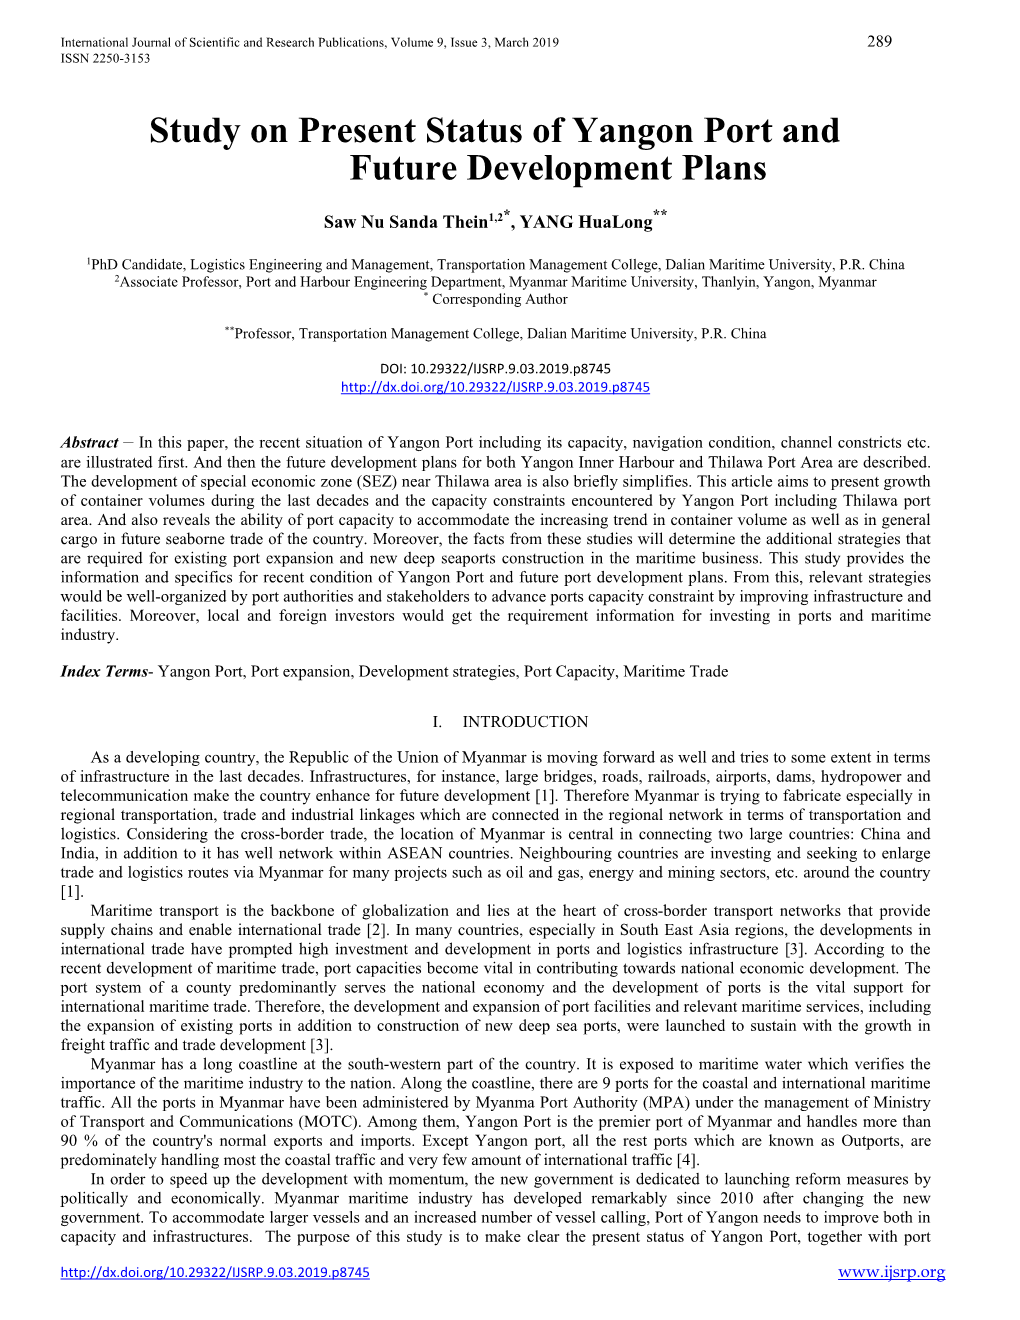 Study on Present Status of Yangon Port and Future Development Plans